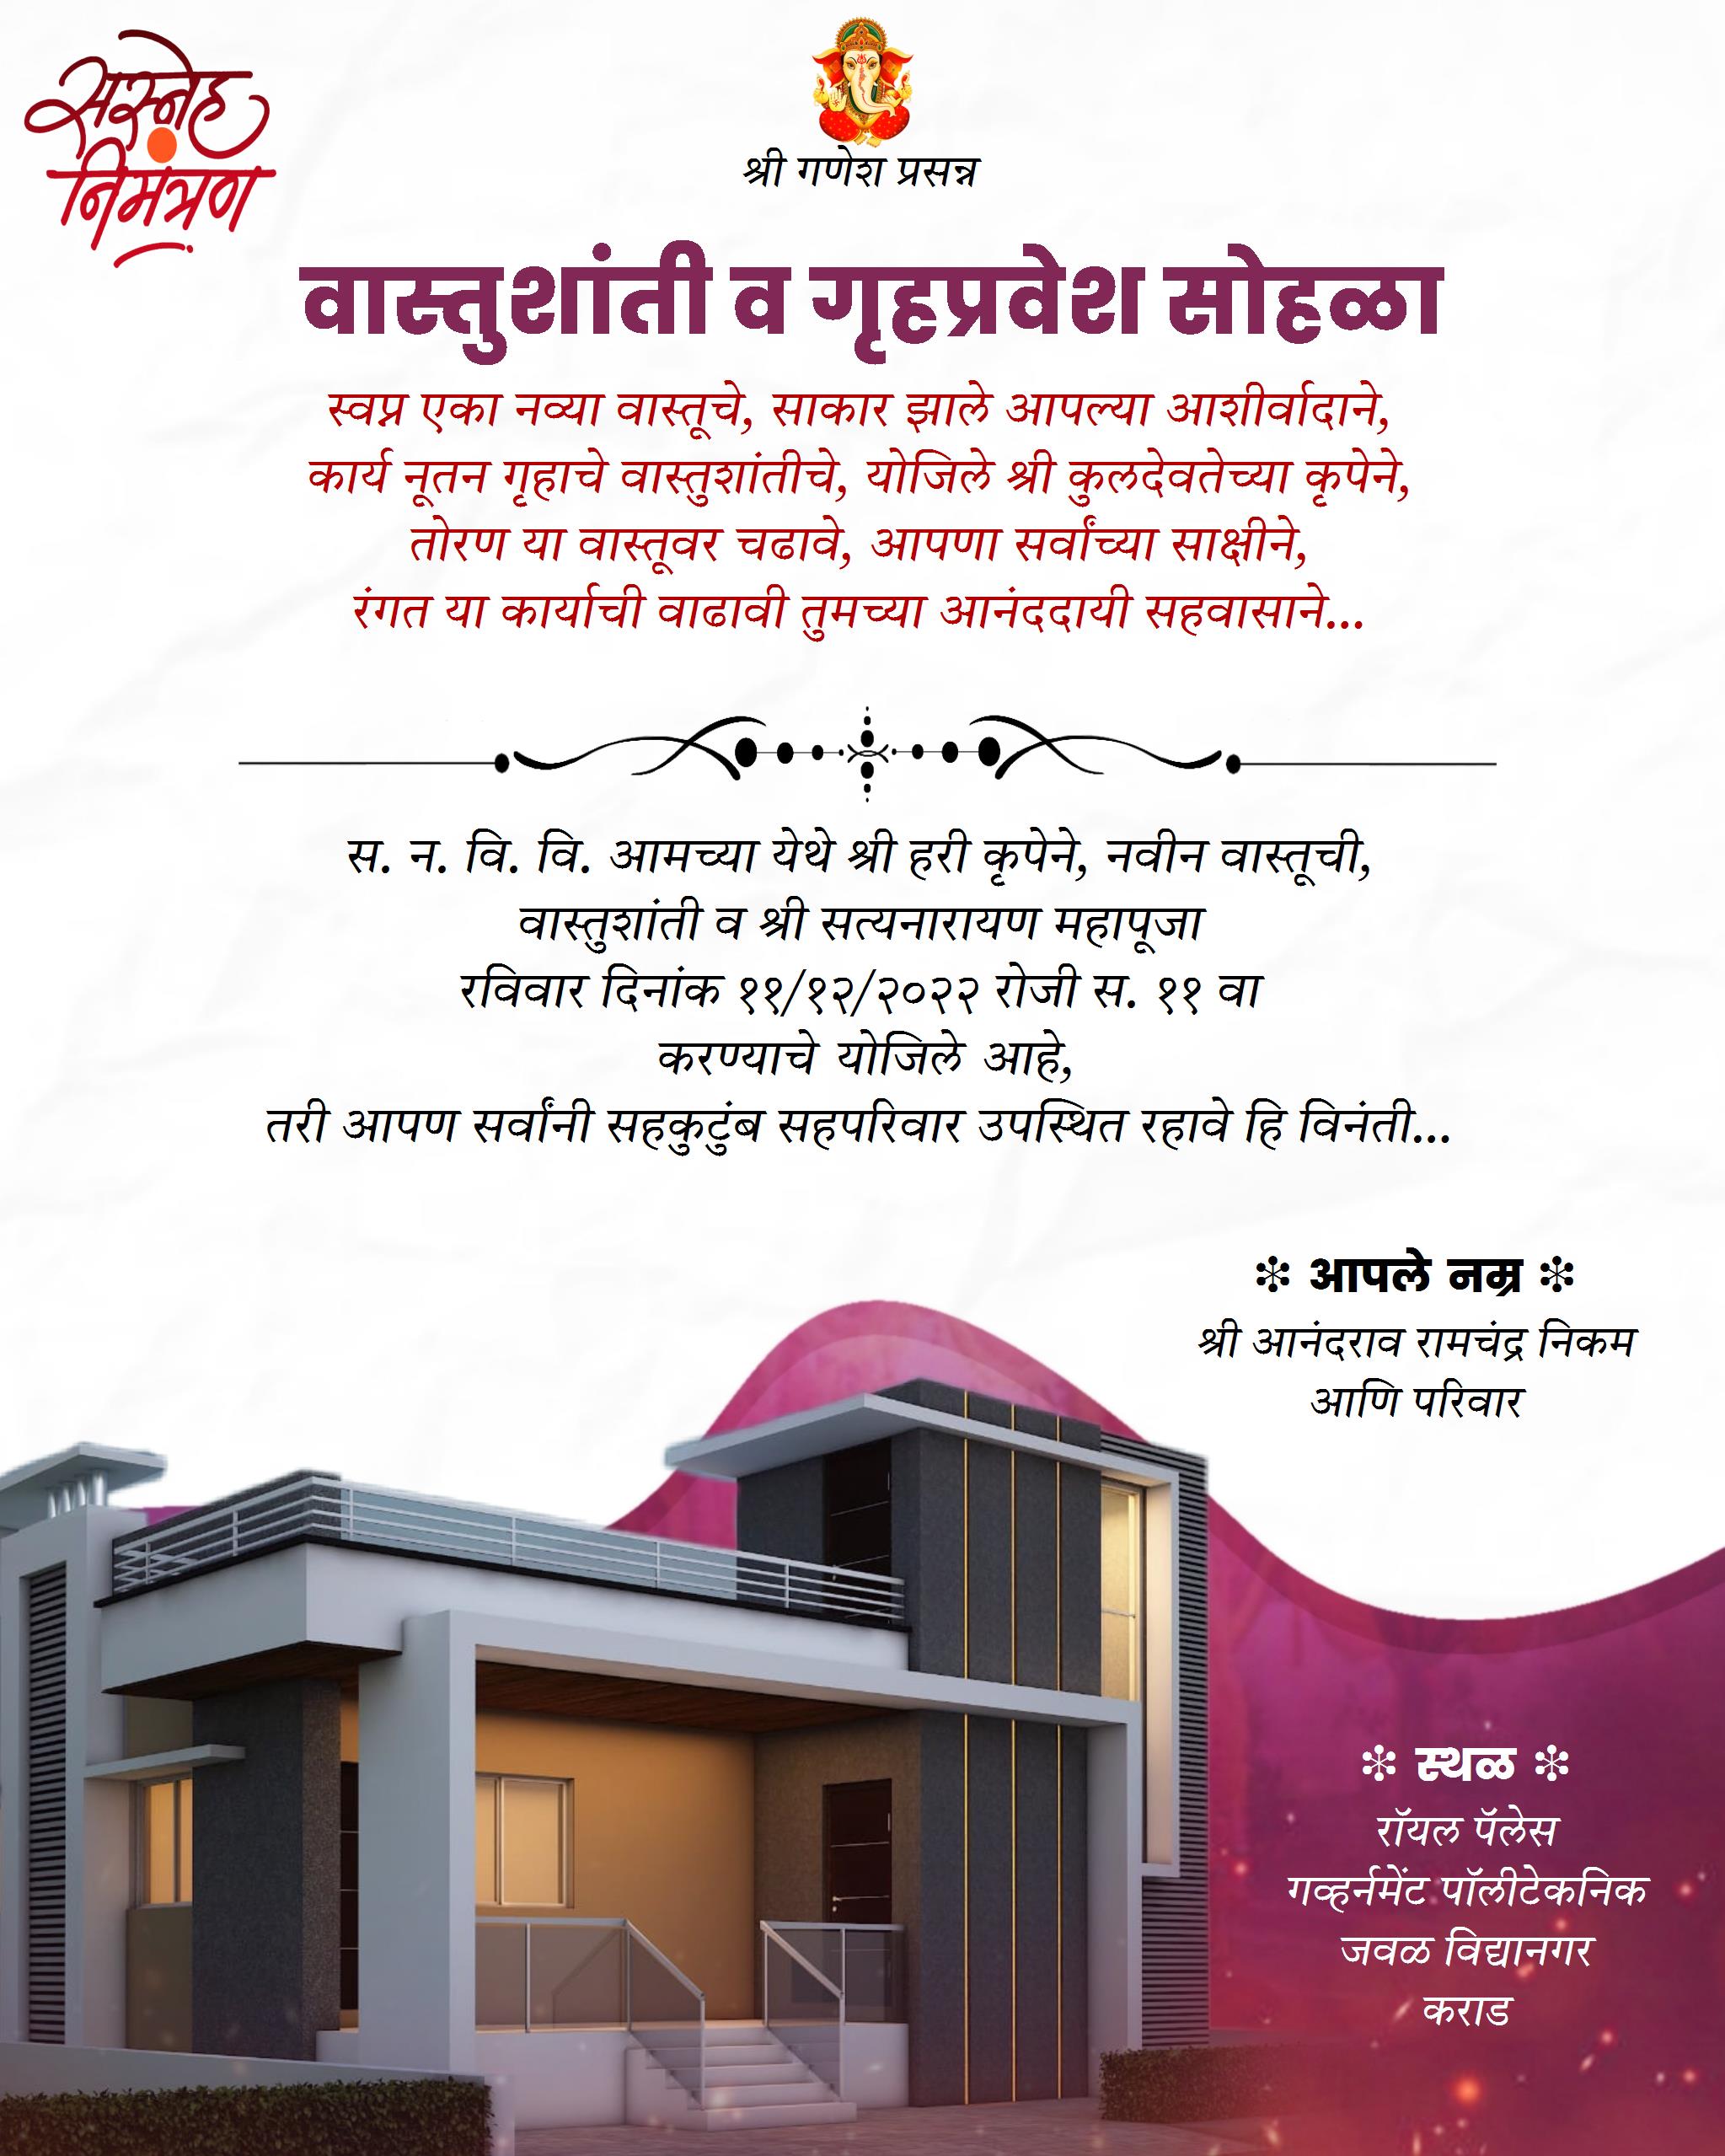 Gruhpravesh invitation card in marathi